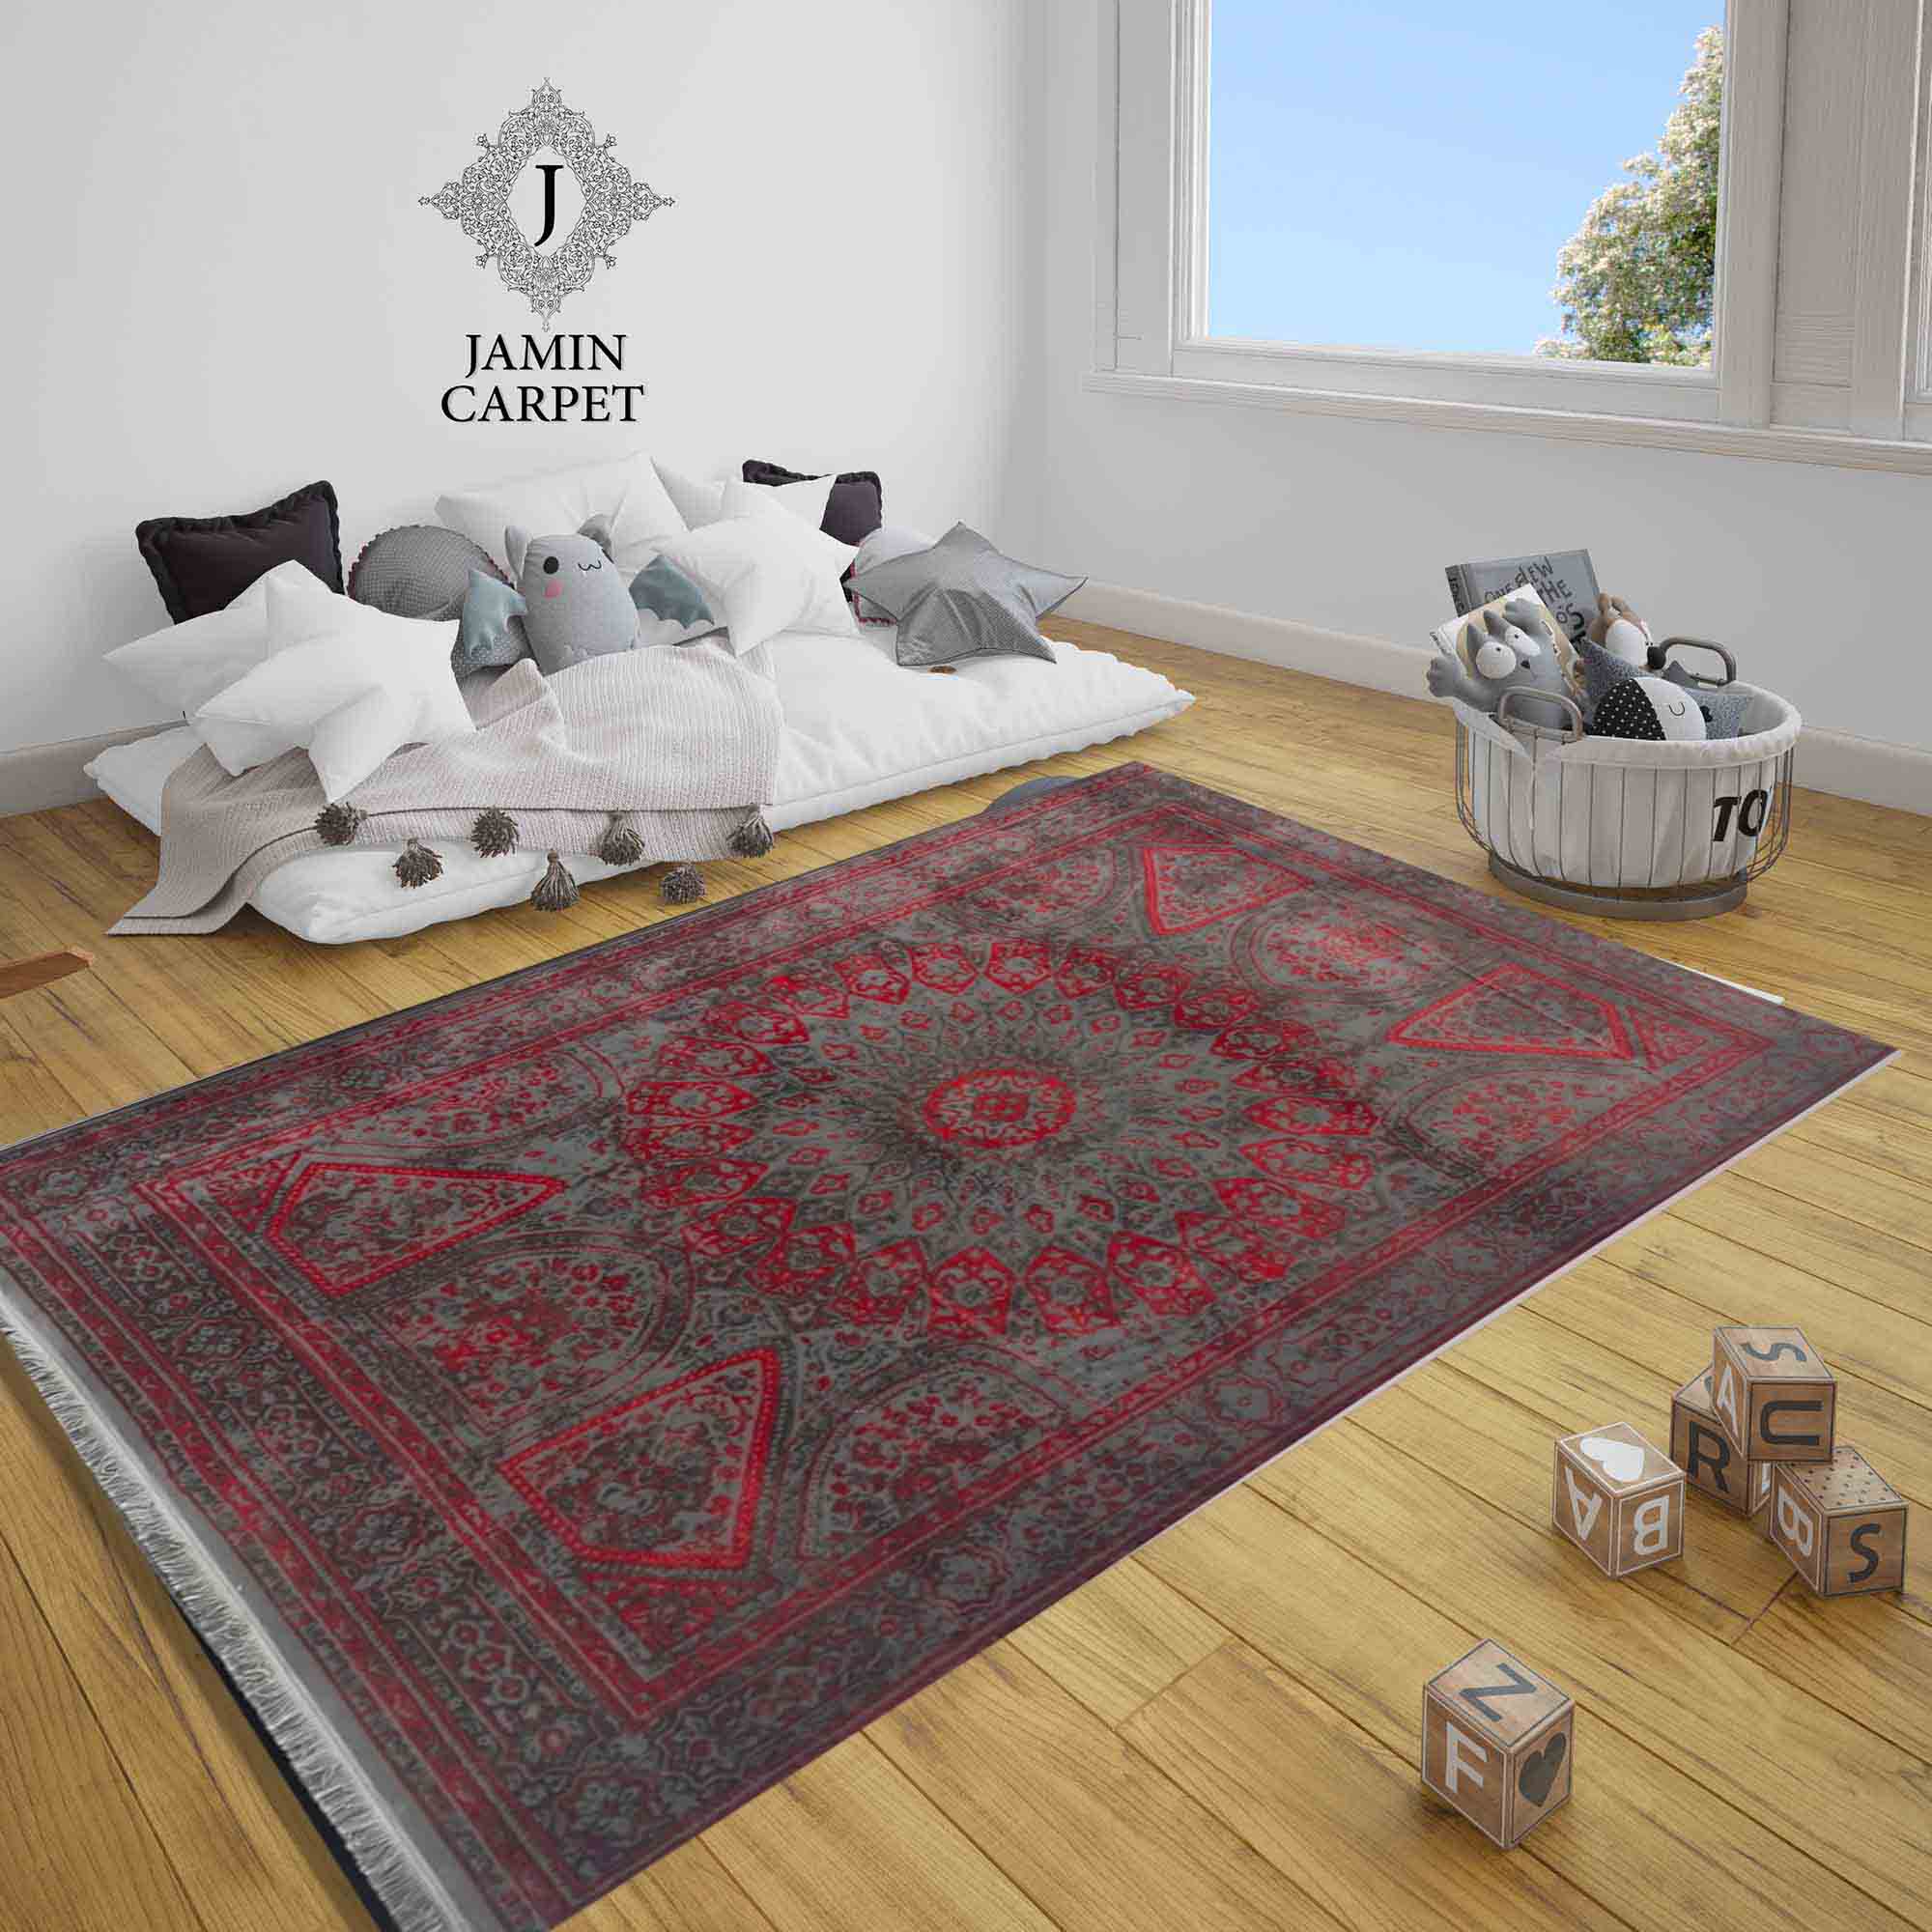 Fantasy carpet code 215 comb 400 density 1800 all acrylic